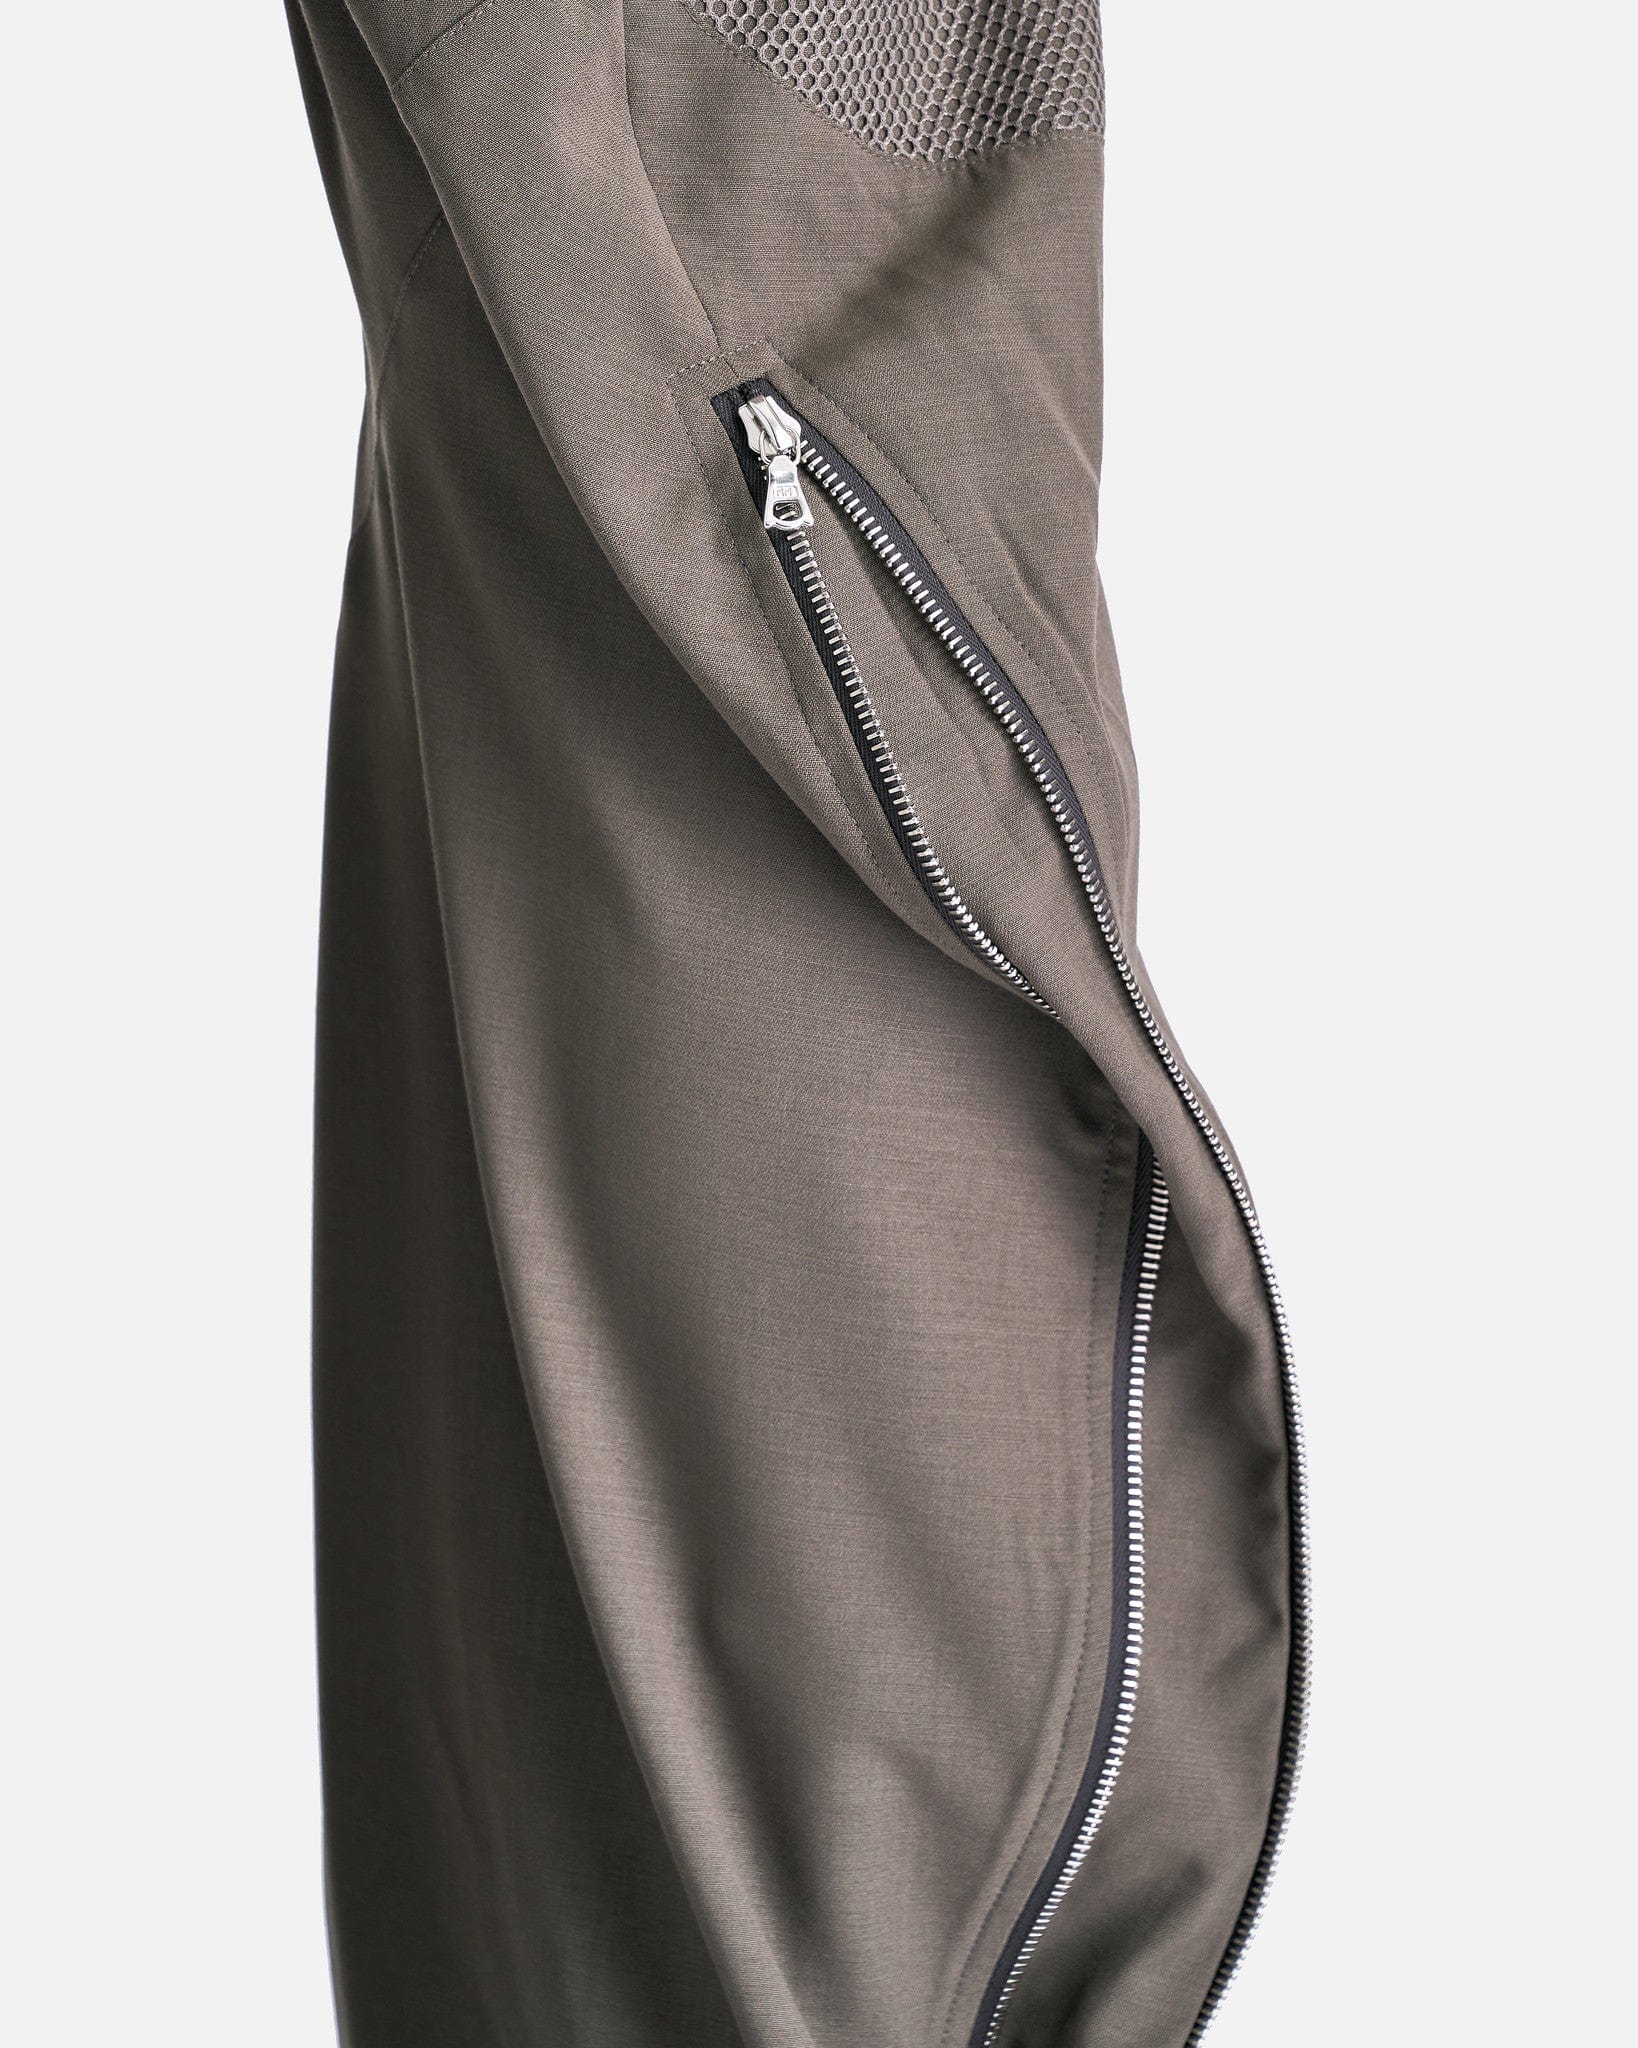 CMMAWEAR Men's Pants Articulated Back-Zip Trousers in Grey